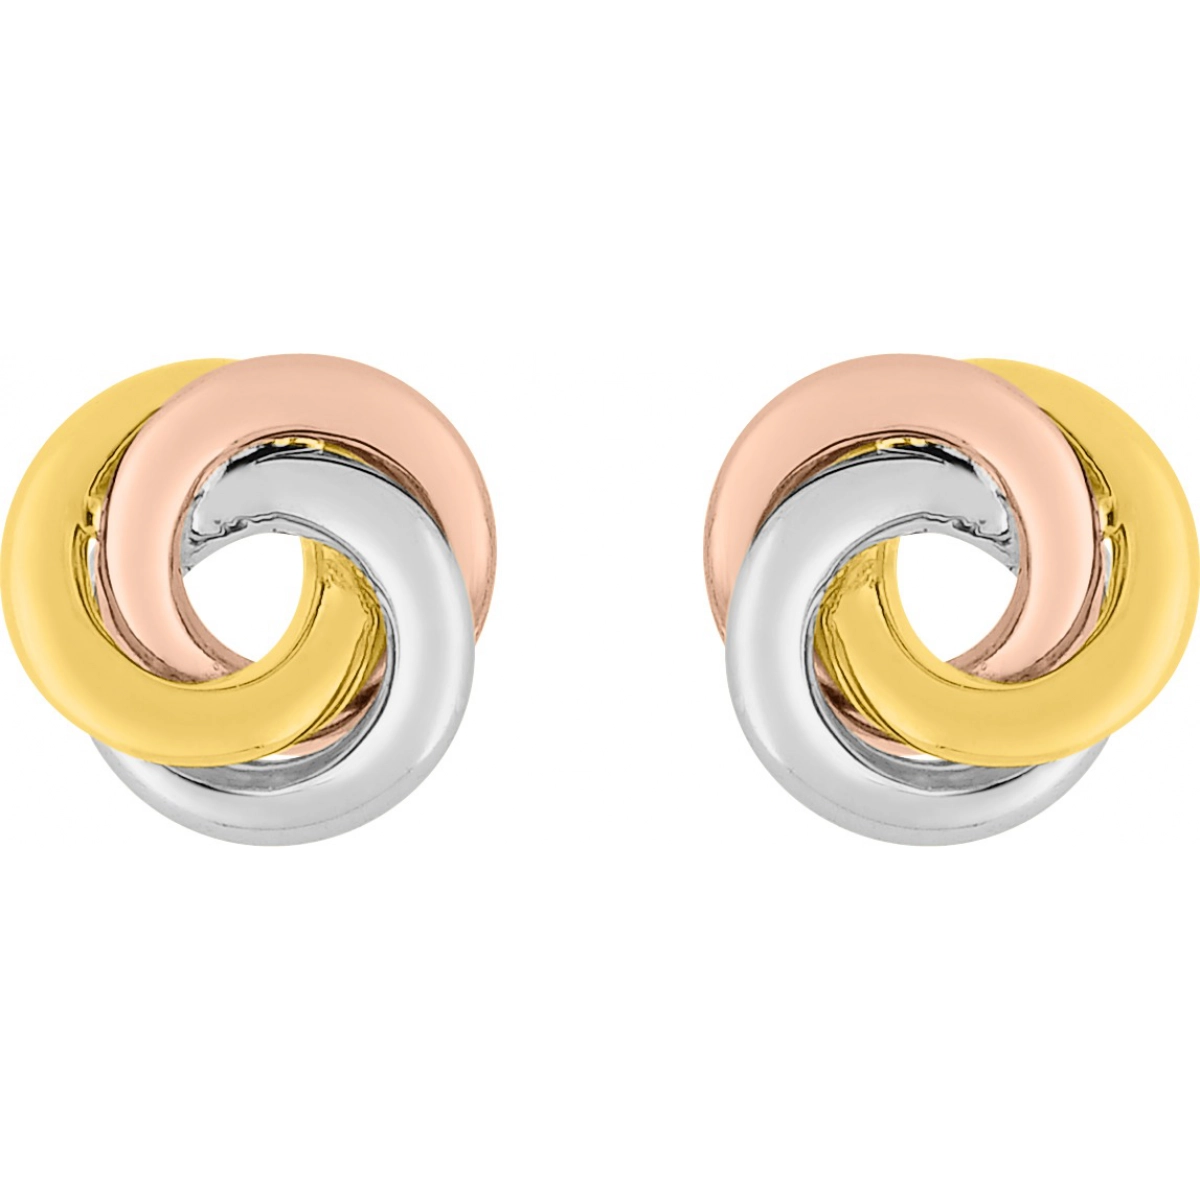 Earrings pair 9K 3TG Lua Blanca  29AA686T.0